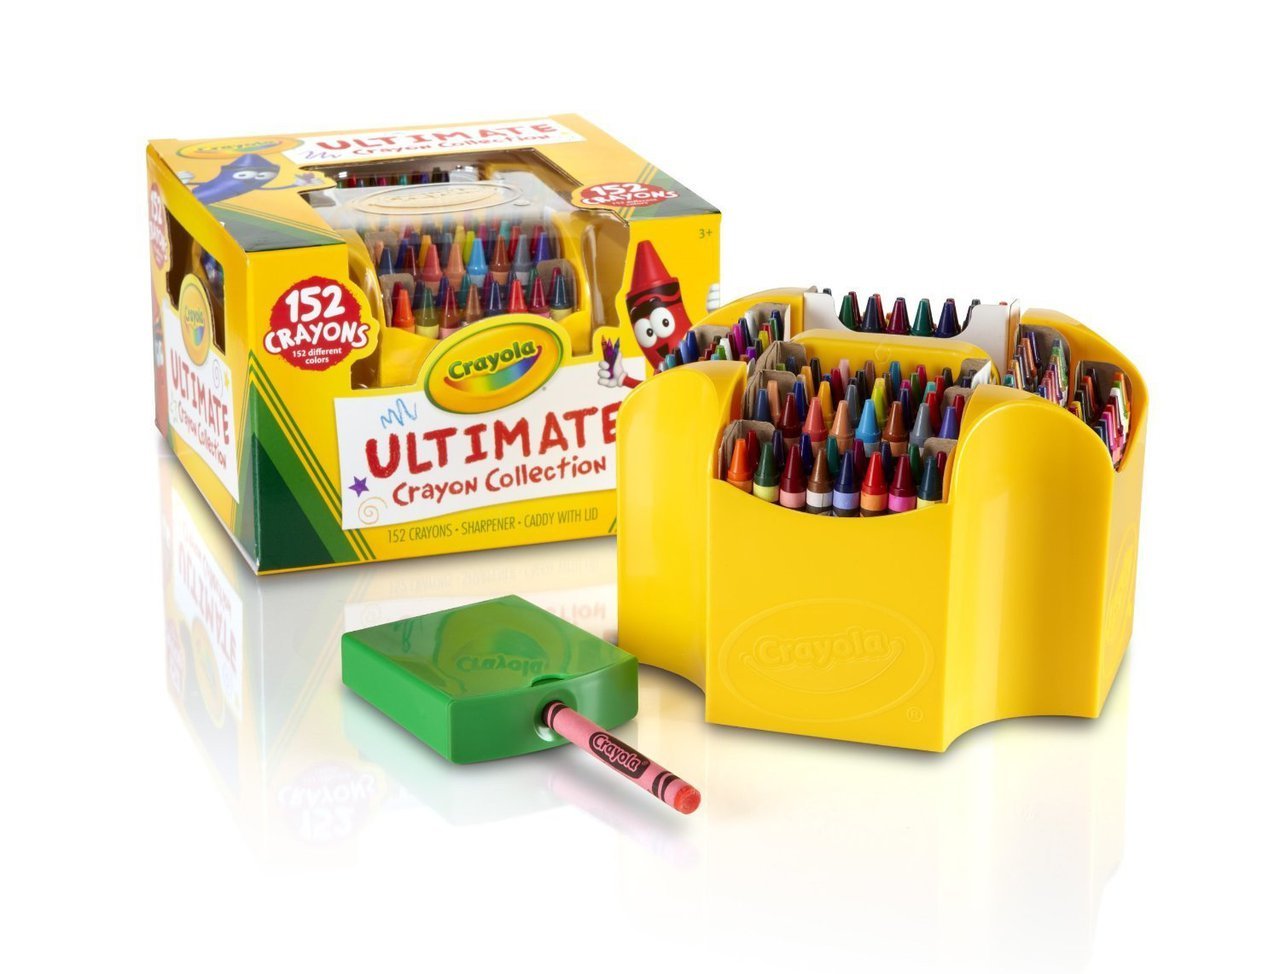 Crayola Ultimate